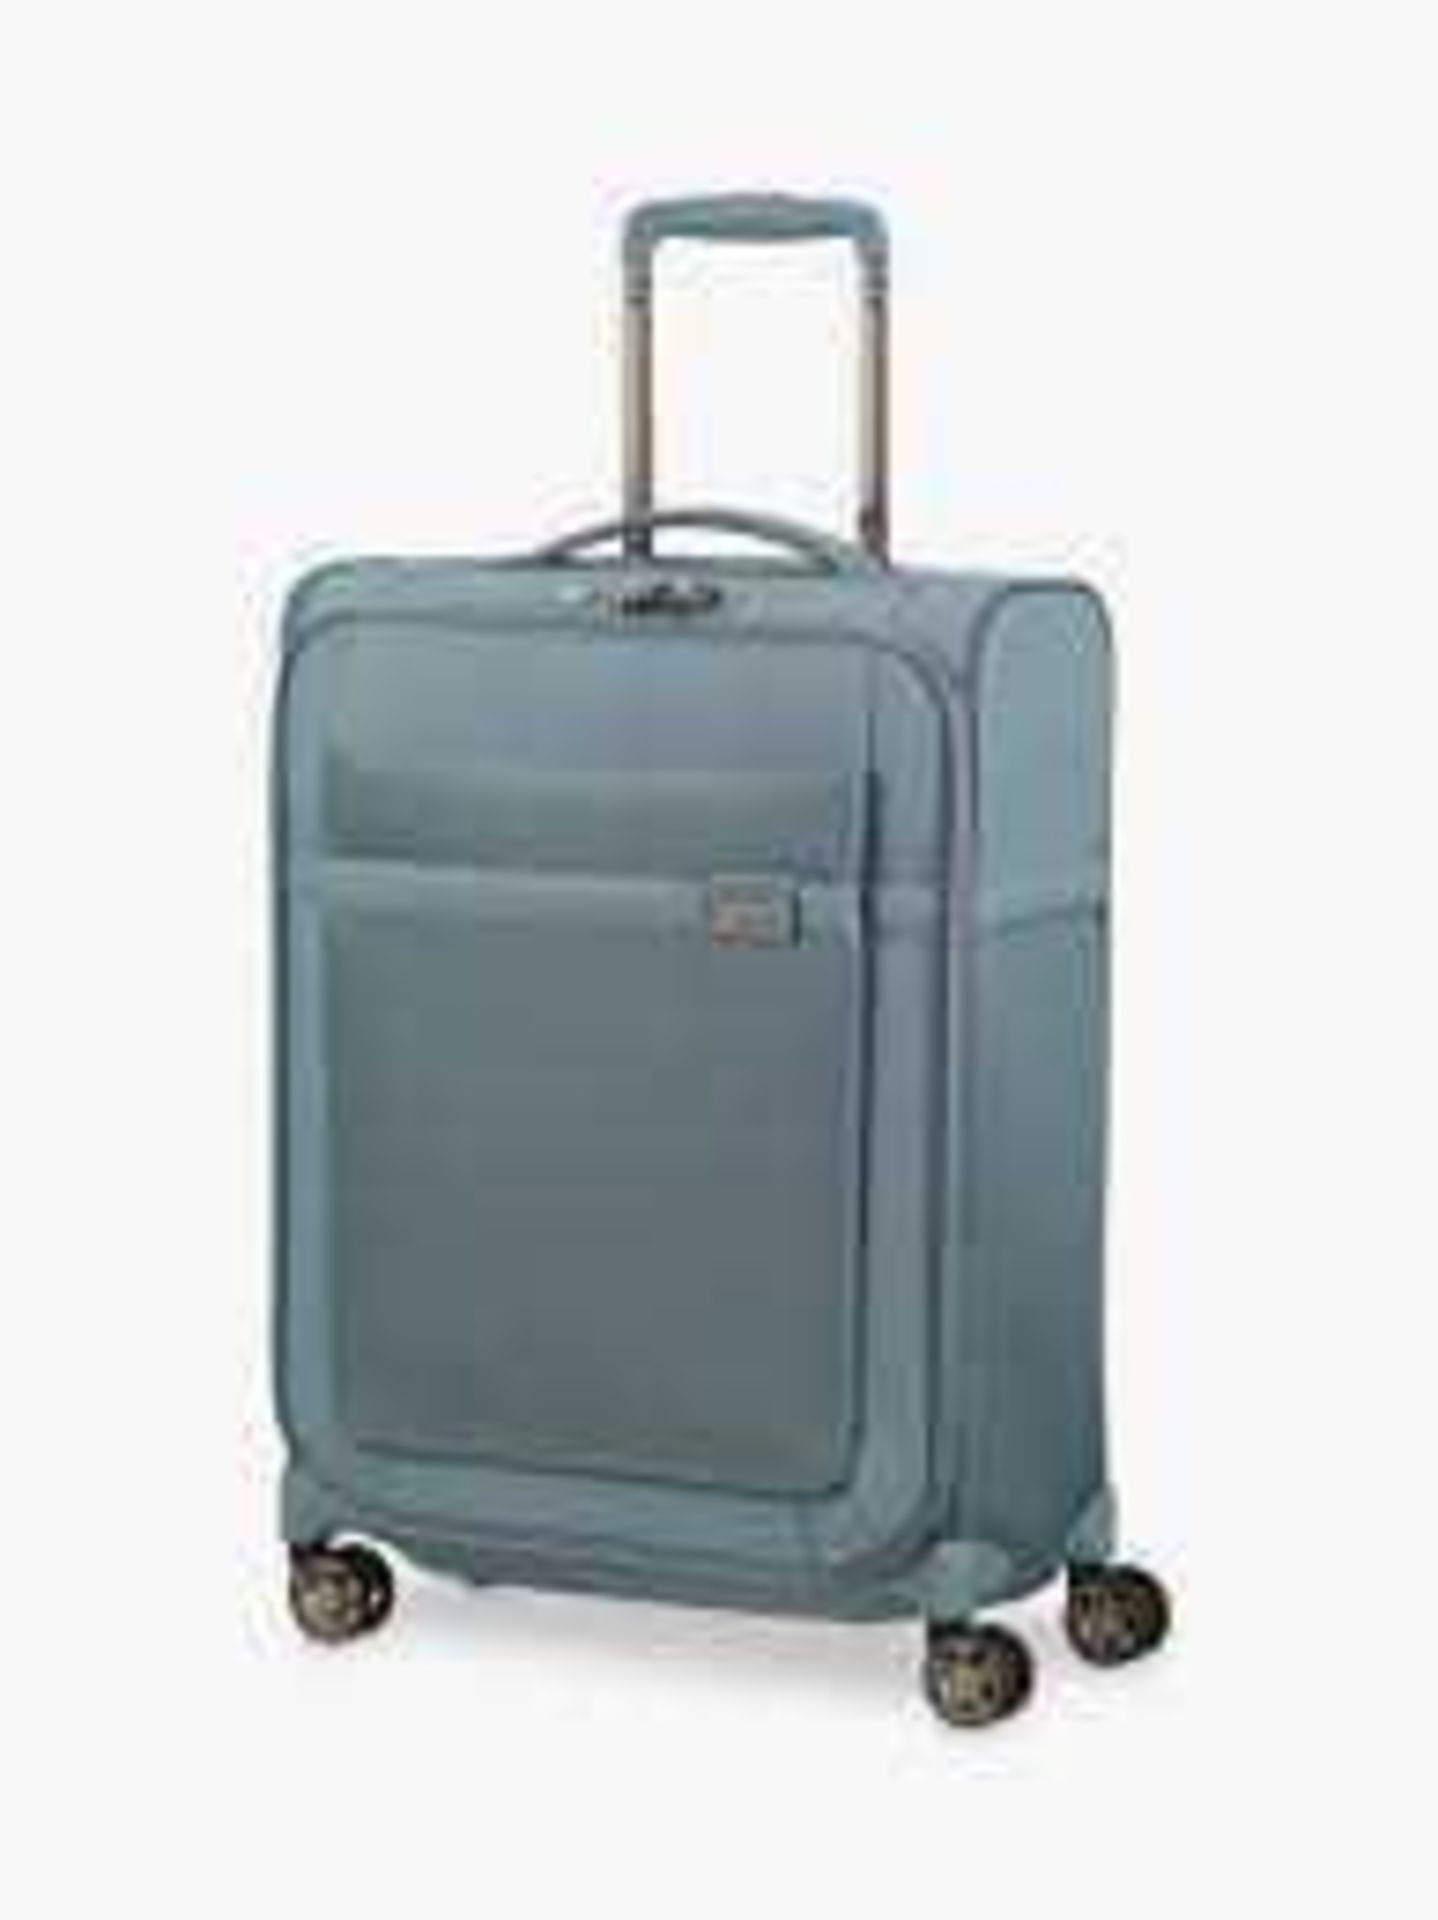 RRP £165 Unboxed John Lewis Samsonite Cabin Size Suitcase In Metallic Green